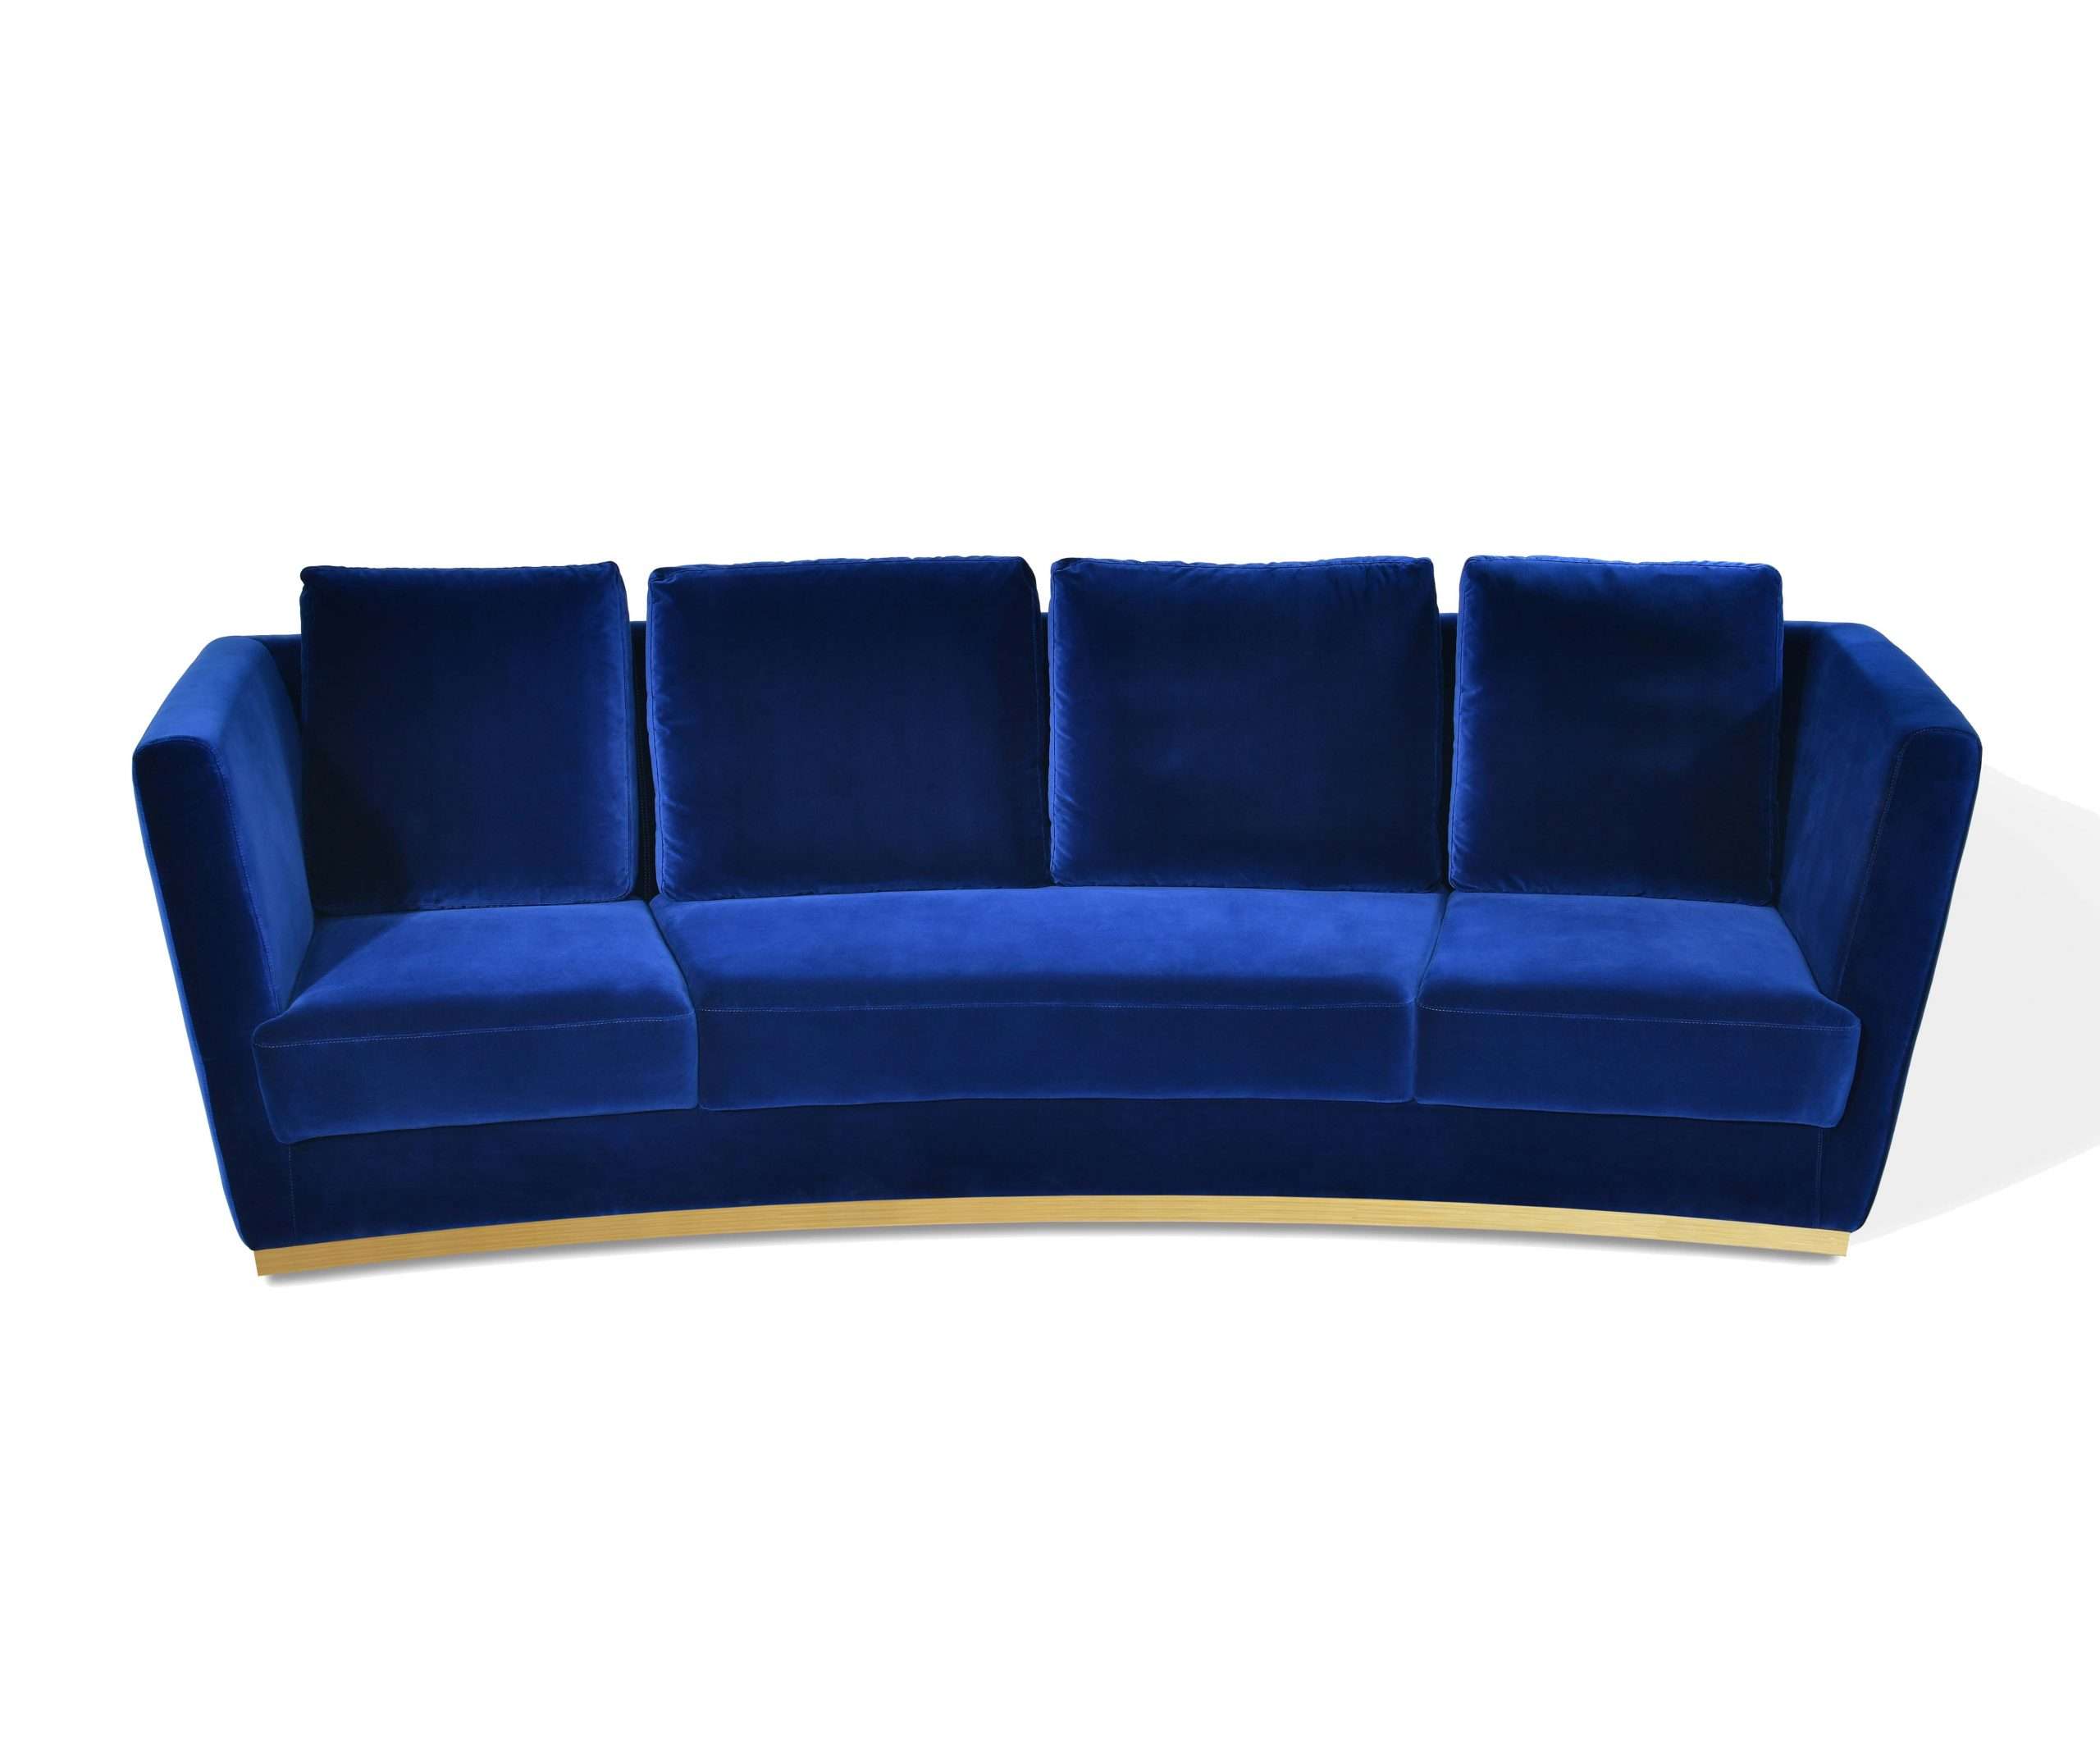 COMPA 3-Seater Sofa - Marano Furniture : : Redefine your mindscape